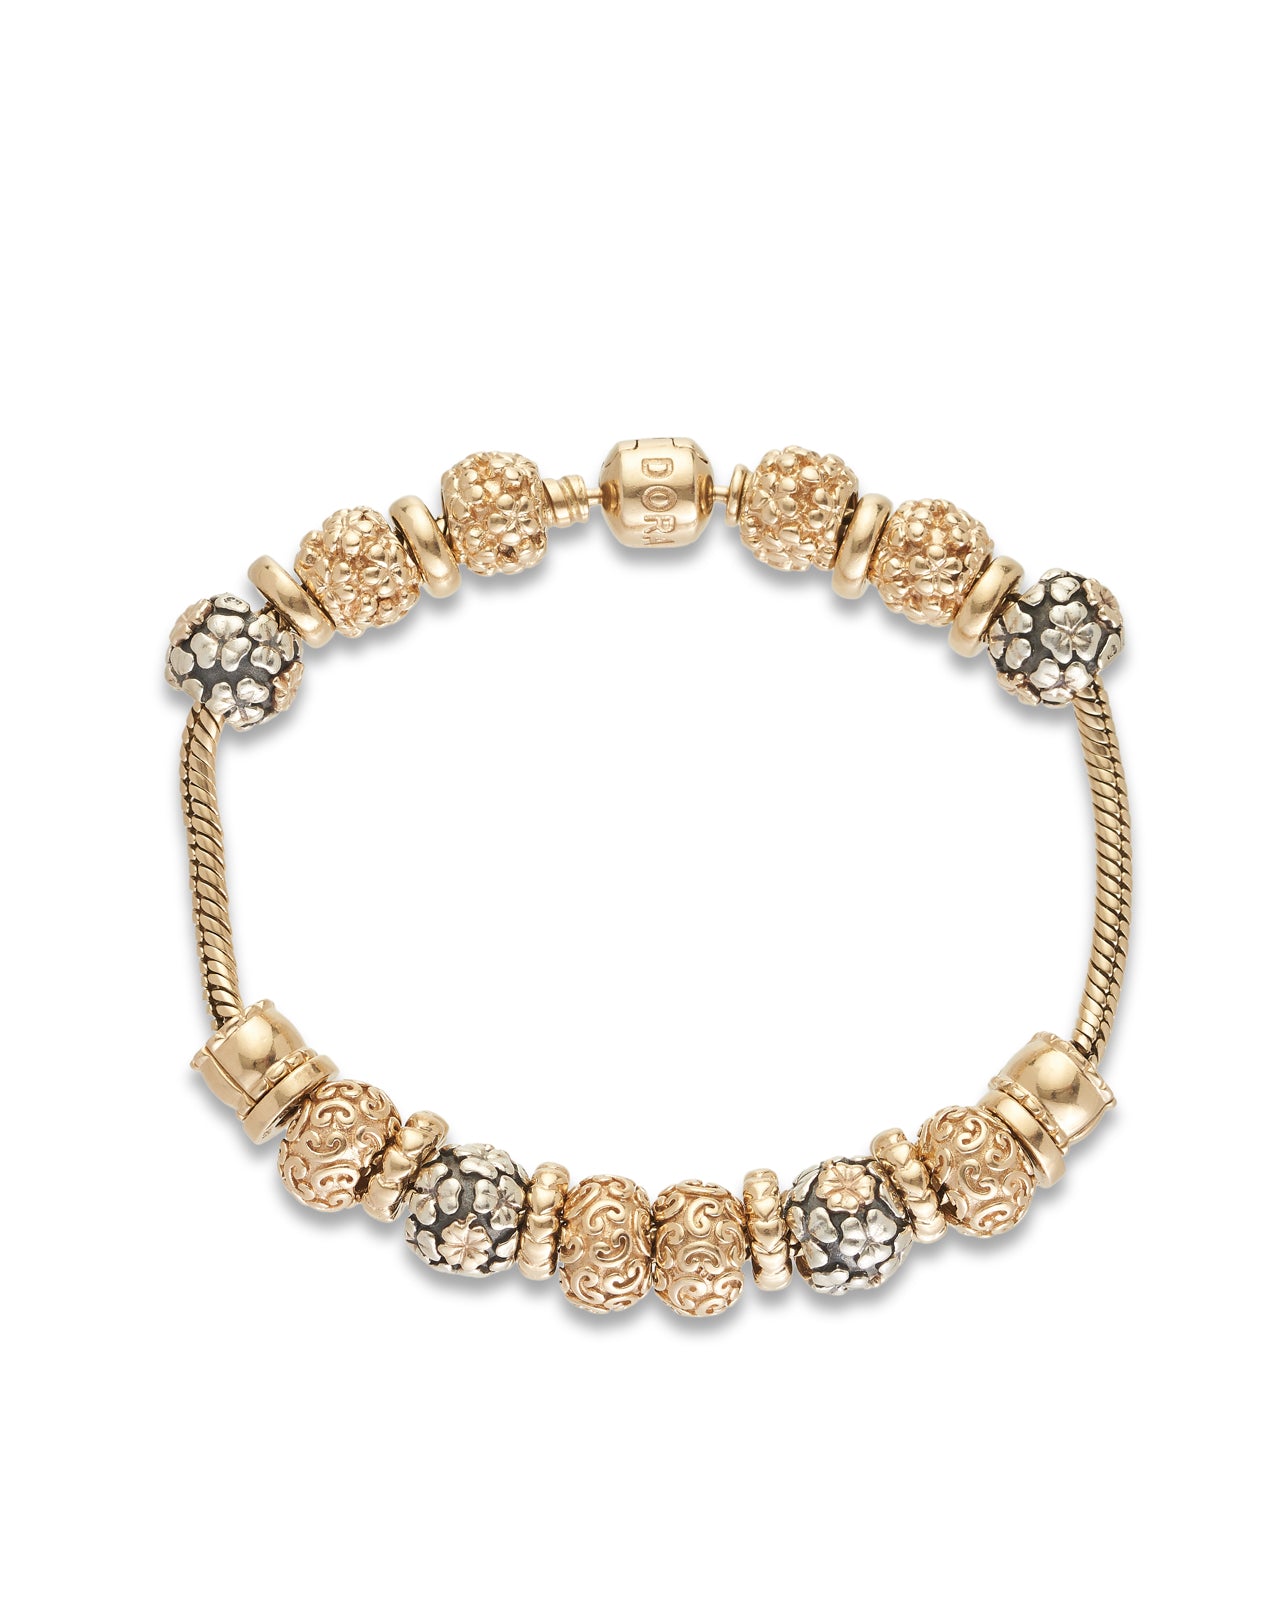 Roman Numeral Bracelet Personalized Gold Bar Bracelet Date Bracelet  Nameplate Bracelet Save the Date Custom Engraved Bracelet - Etsy | Gold bar  bracelet, Nameplate bracelet, Custom engraved bracelet